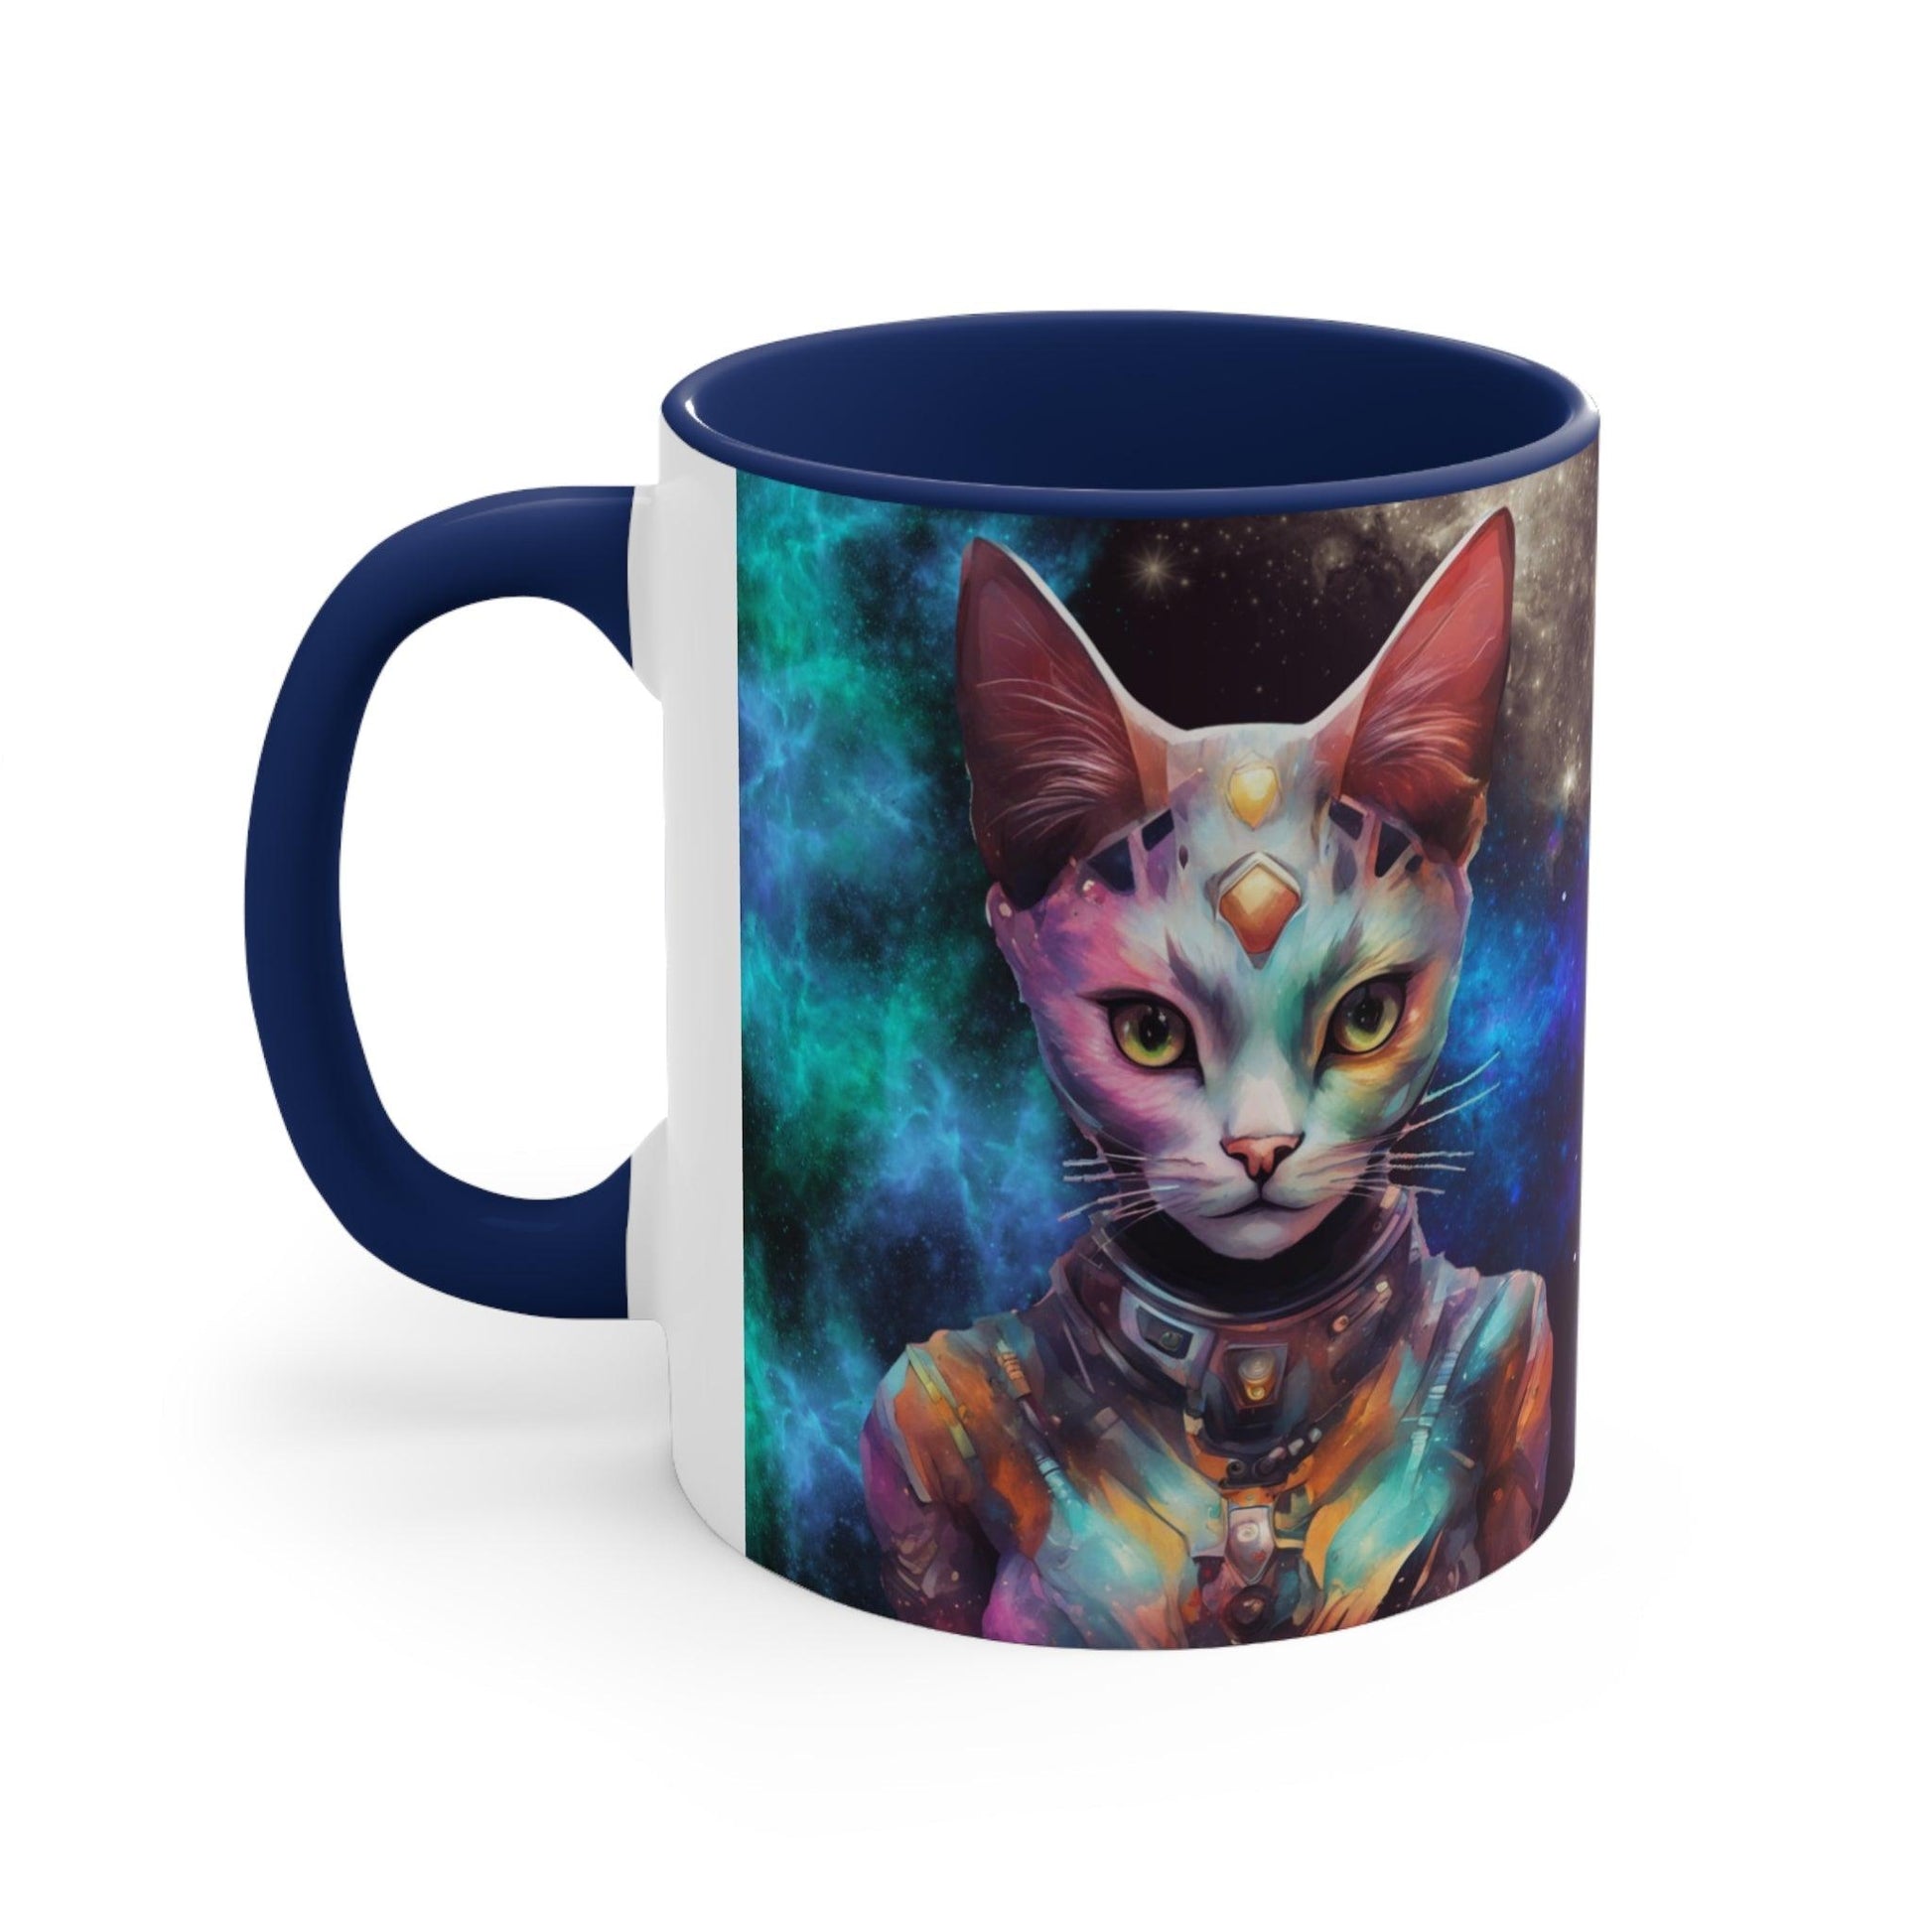 Mug "Alien Invasion" - Alien Cat - Accent Coffee Mug, 11oz - Soulshinecreators